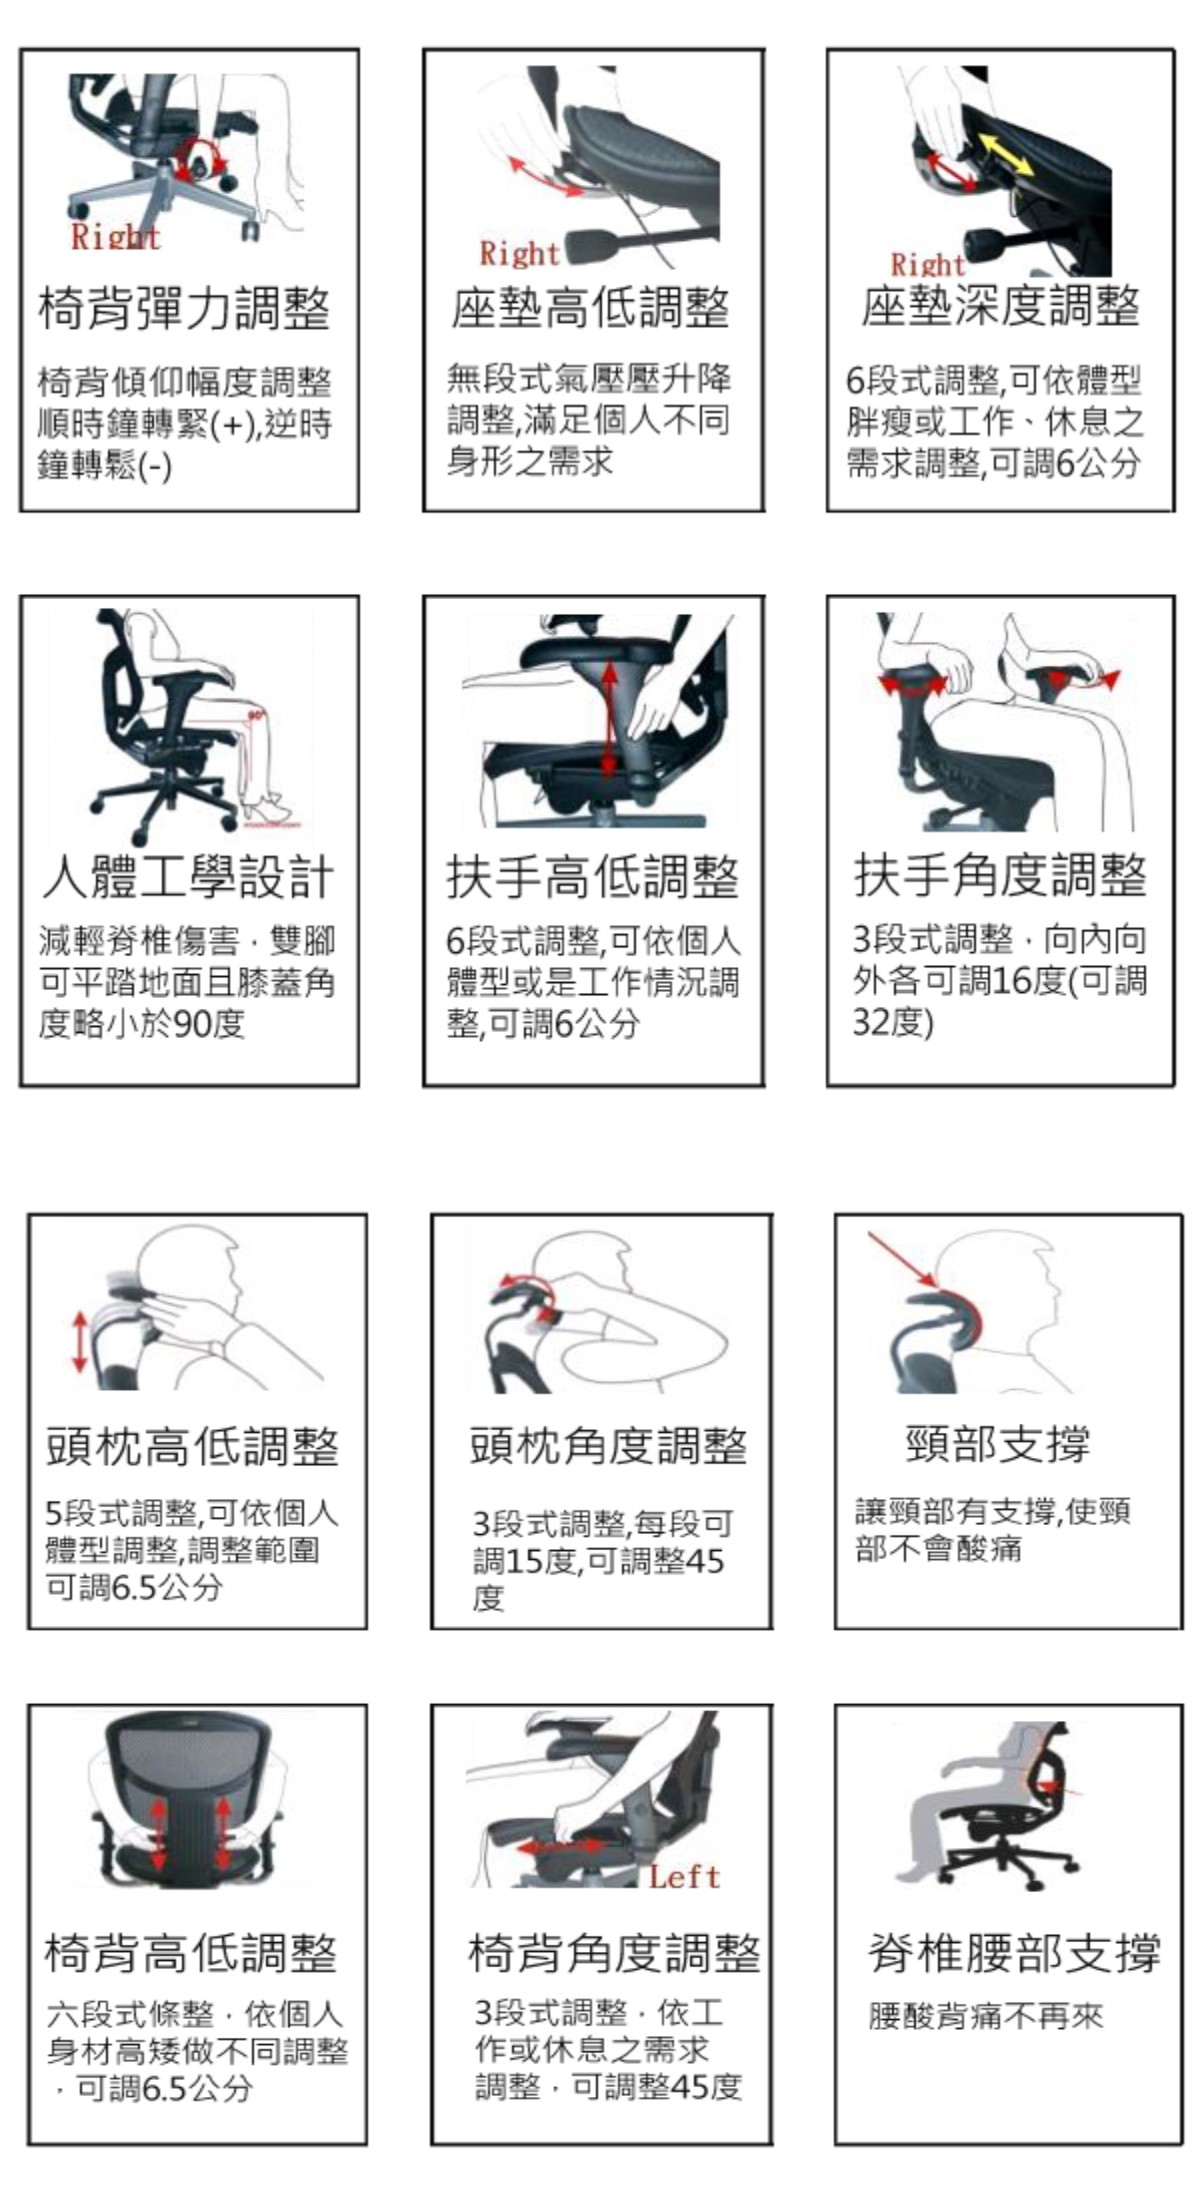 Enjoy 121人體工學椅|電腦網椅-線控豪華版各項功能詳細說明